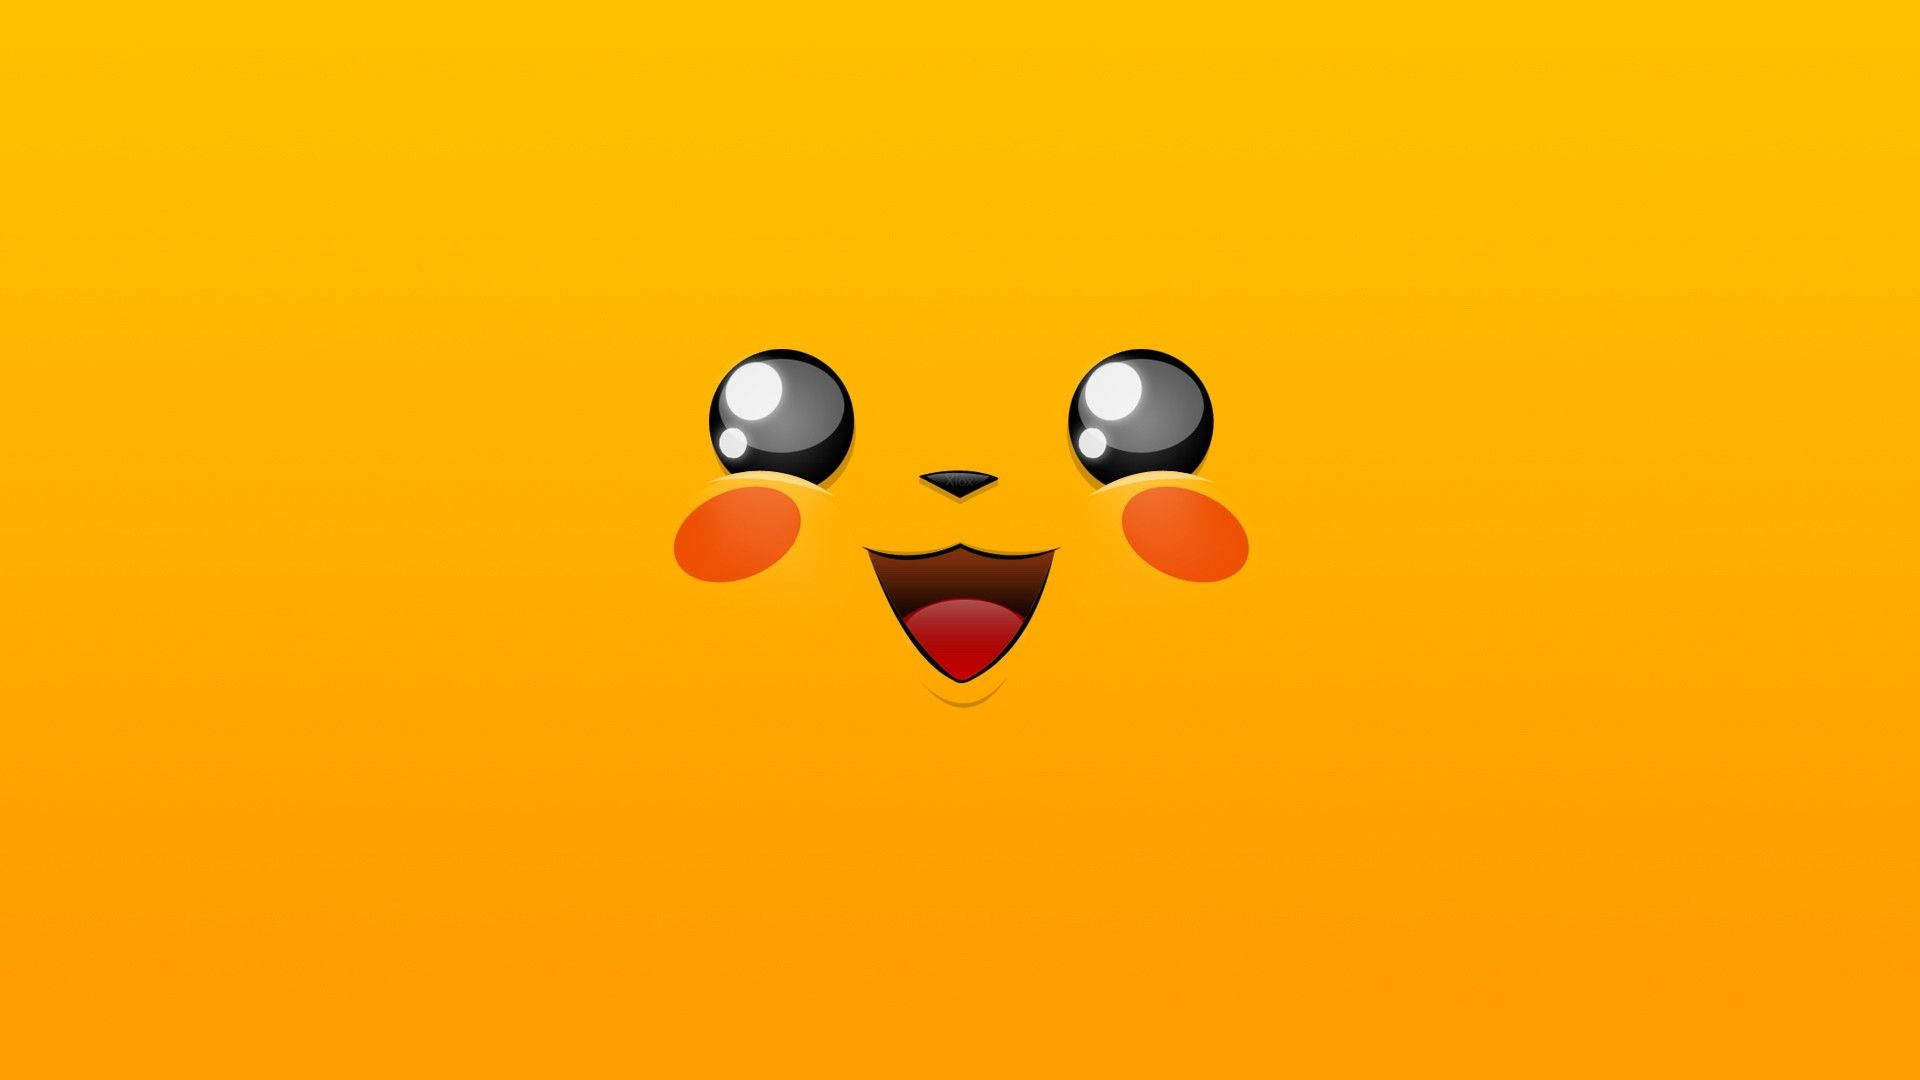 Pikachu 3d Pokémon With Goggly Eyes